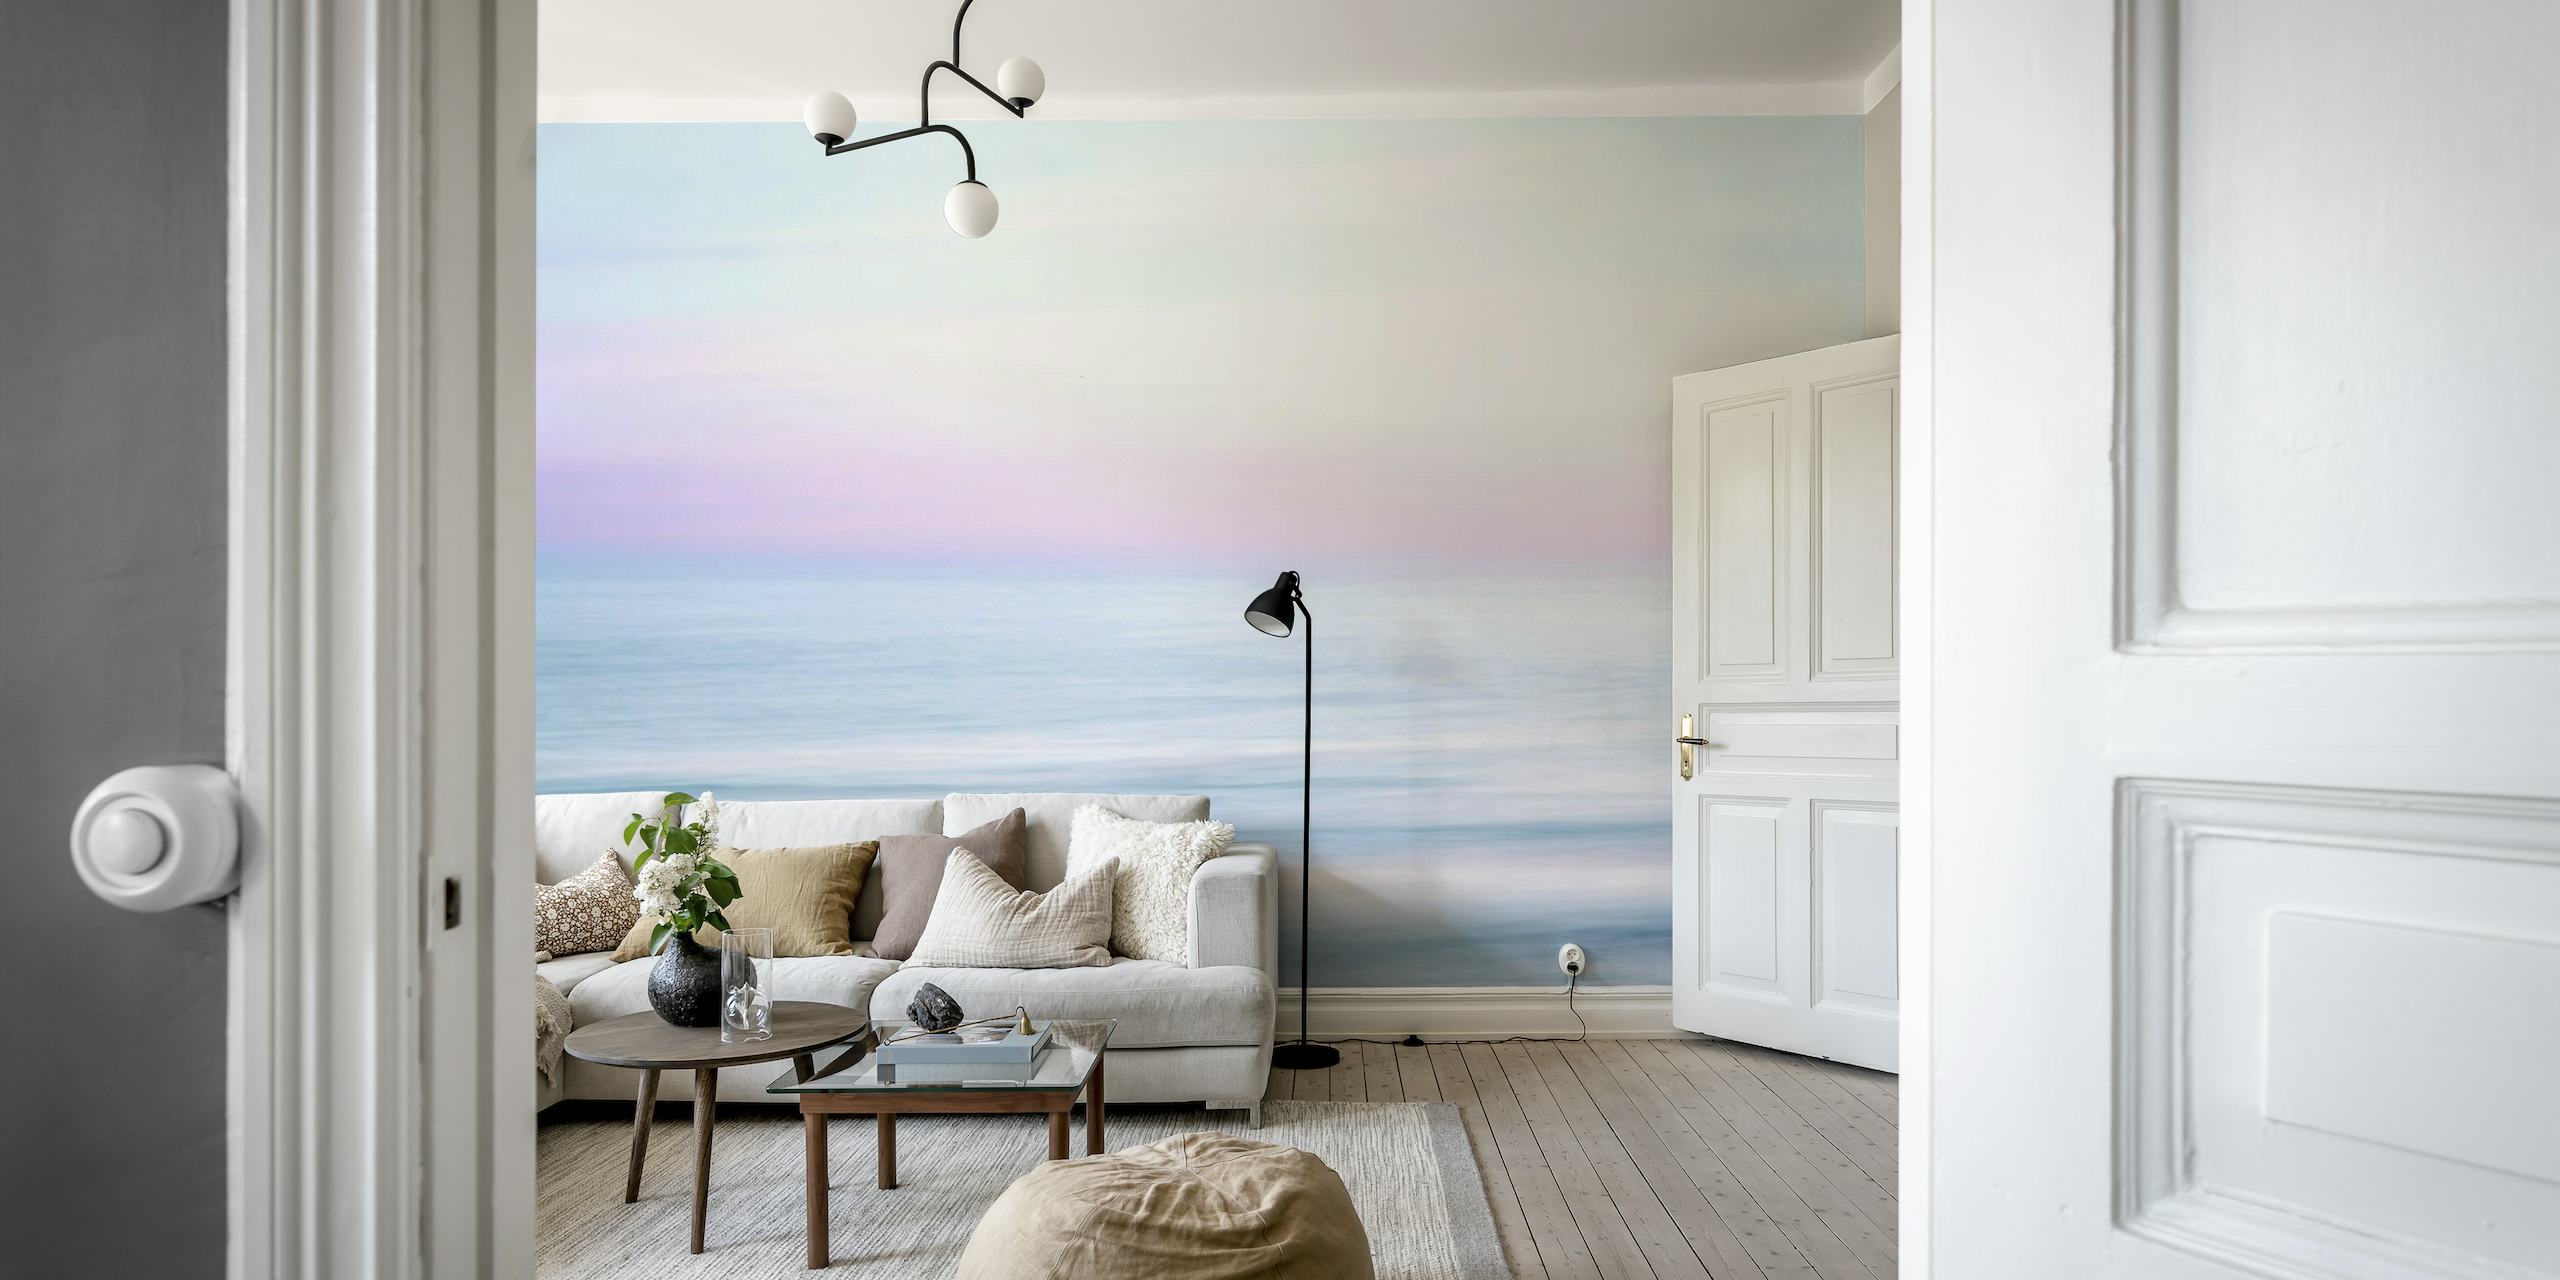 Blurred ocean and sky papel pintado